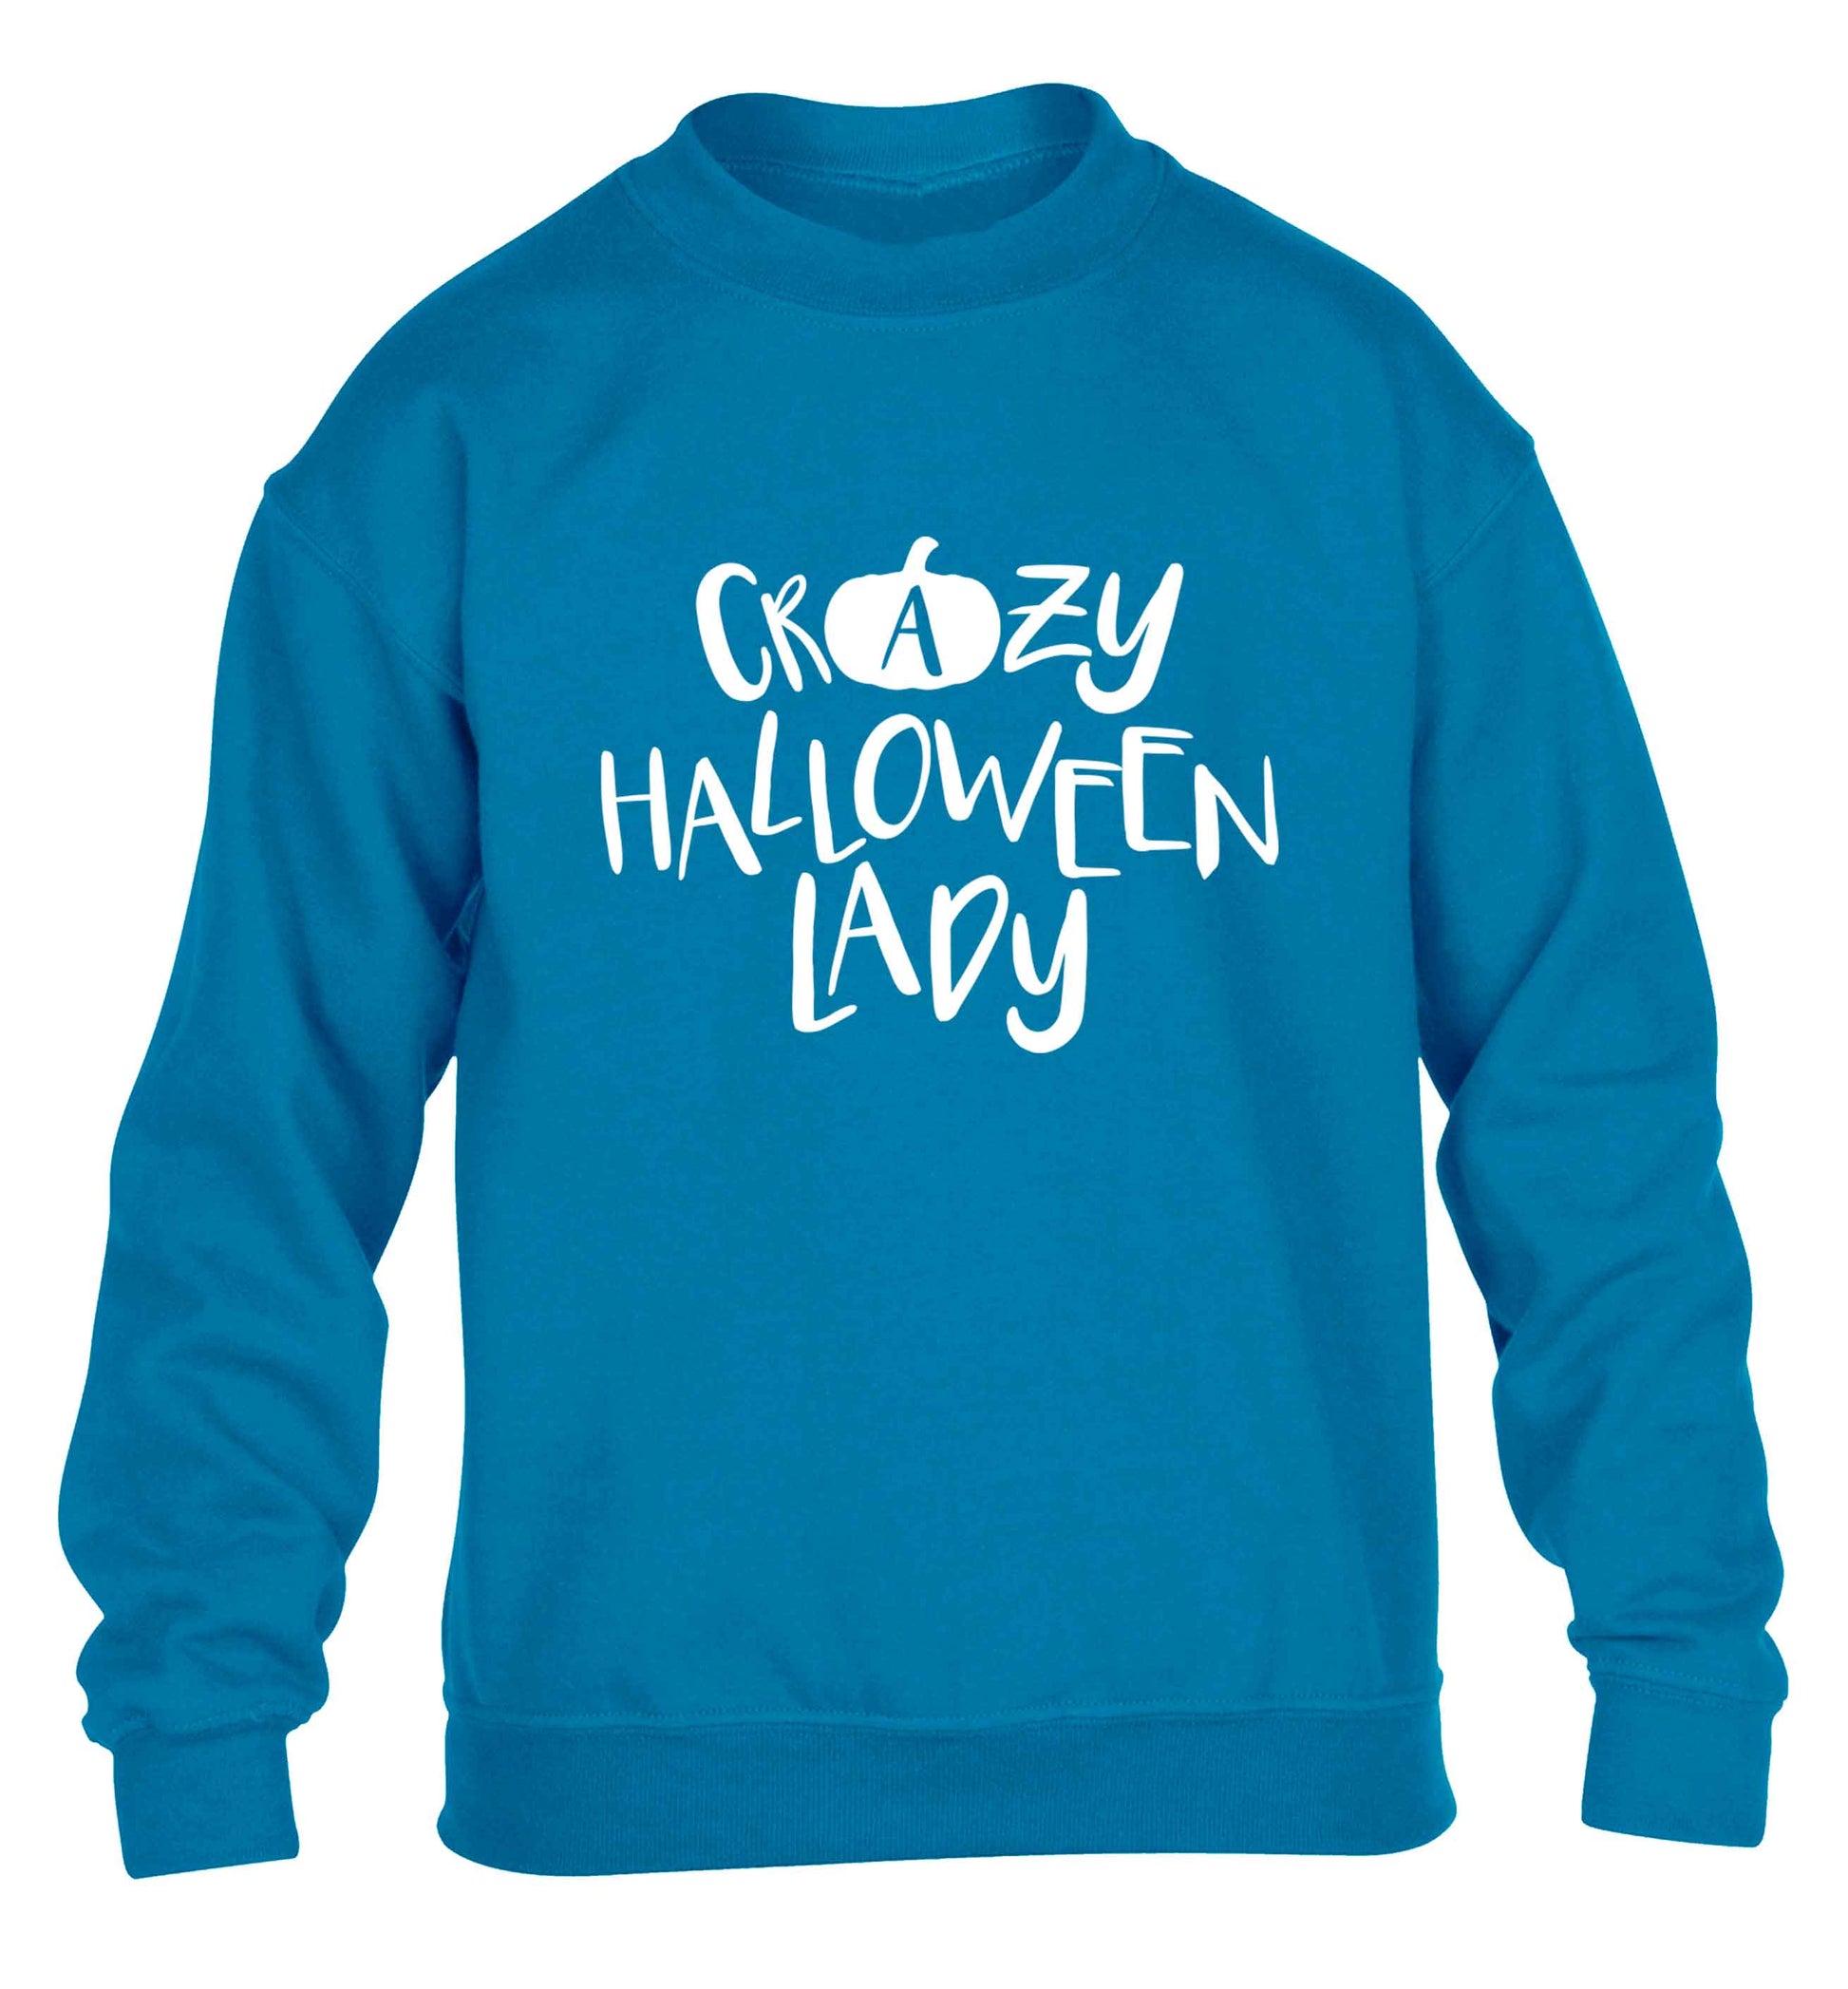 Crazy halloween lady children's blue sweater 12-13 Years